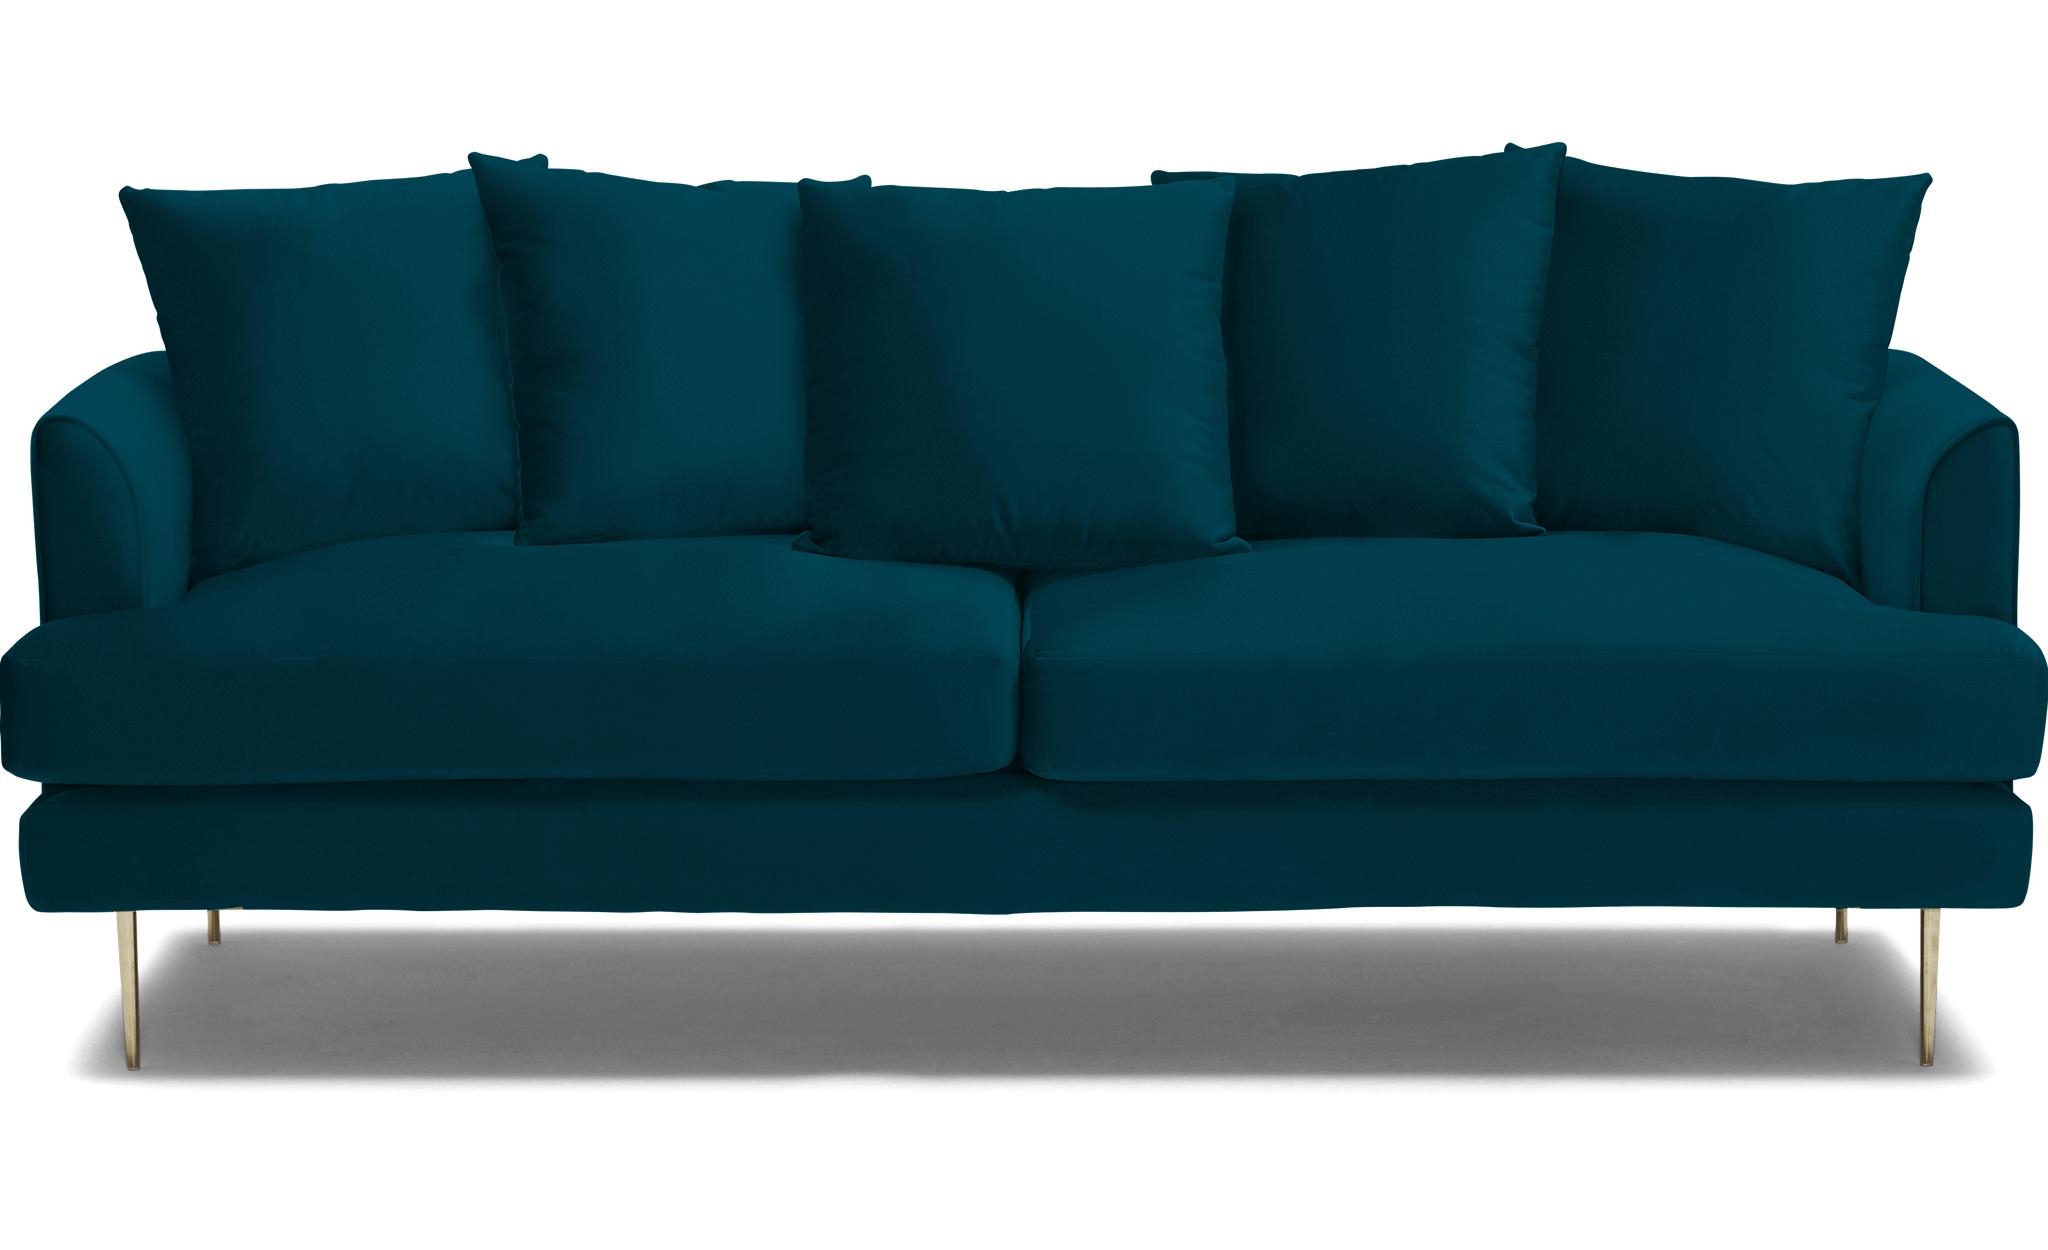 Blue Aime Mid Century Modern Sofa - Key Largo Zenith Teal - Image 0